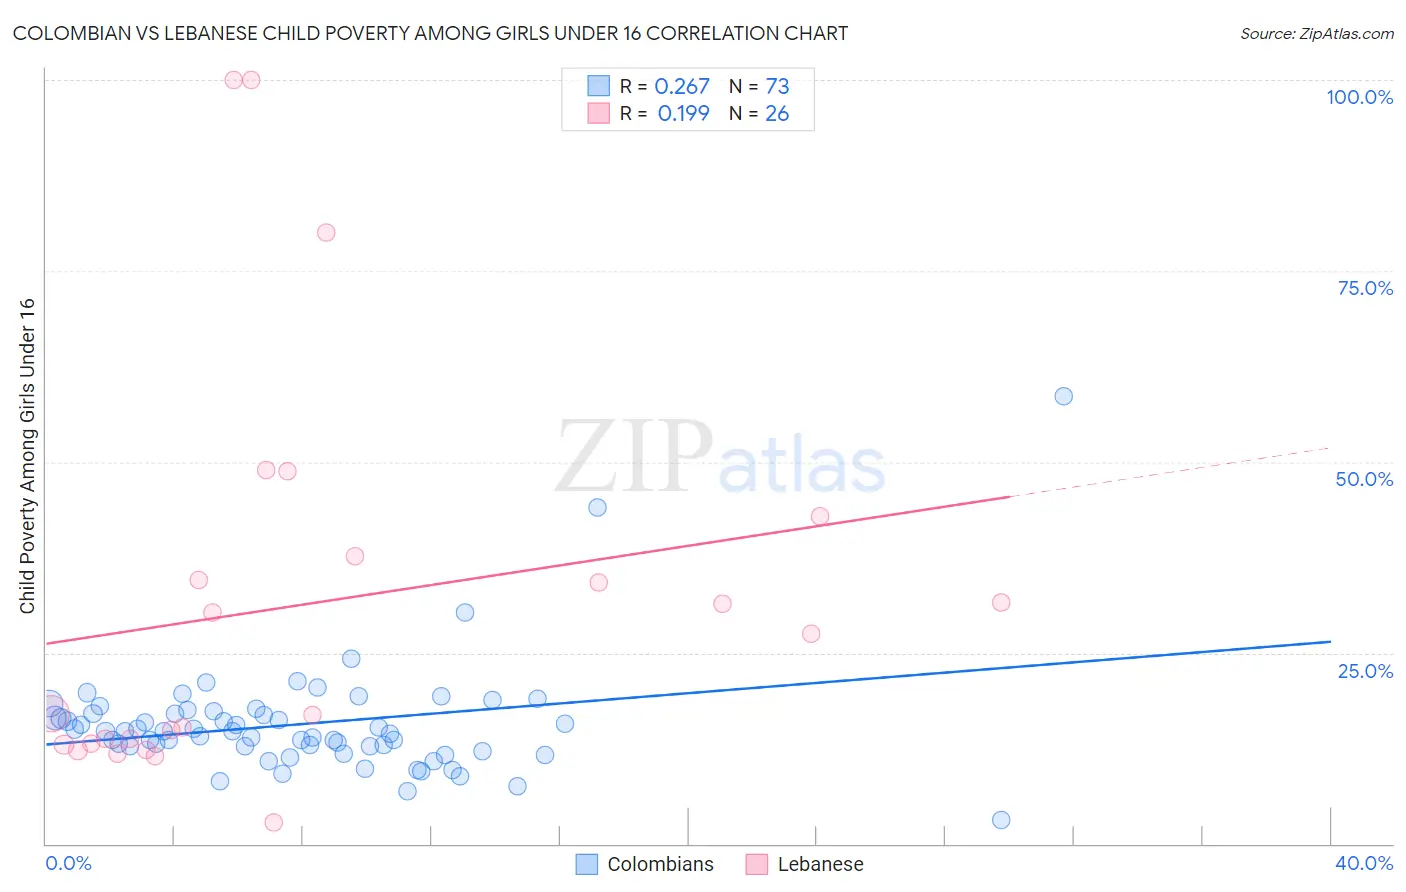 Colombian vs Lebanese Child Poverty Among Girls Under 16